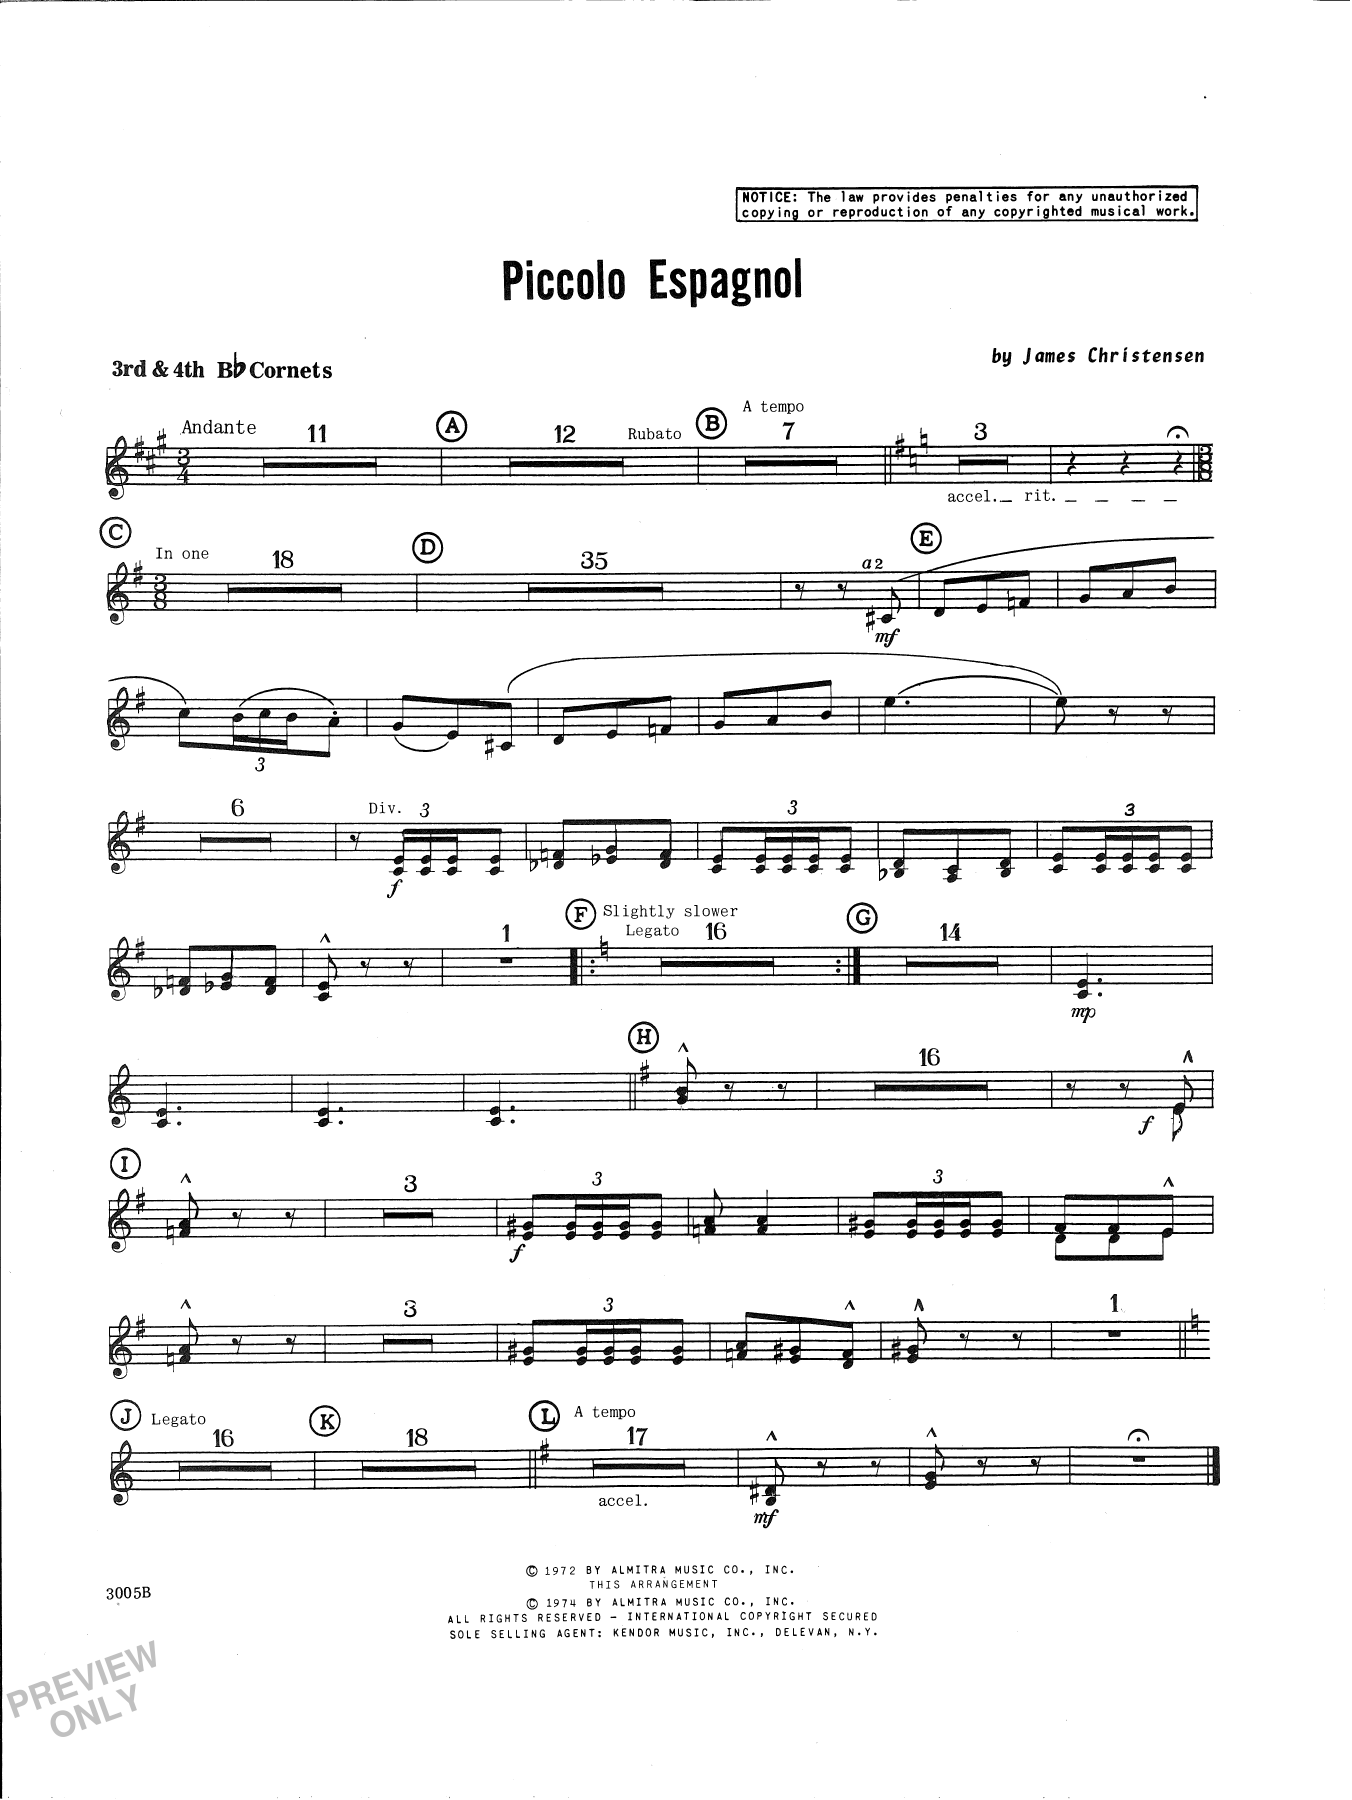 Download James Christensen Piccolo Espagnol - 3rd & 4th Bb Trumpet Sheet Music